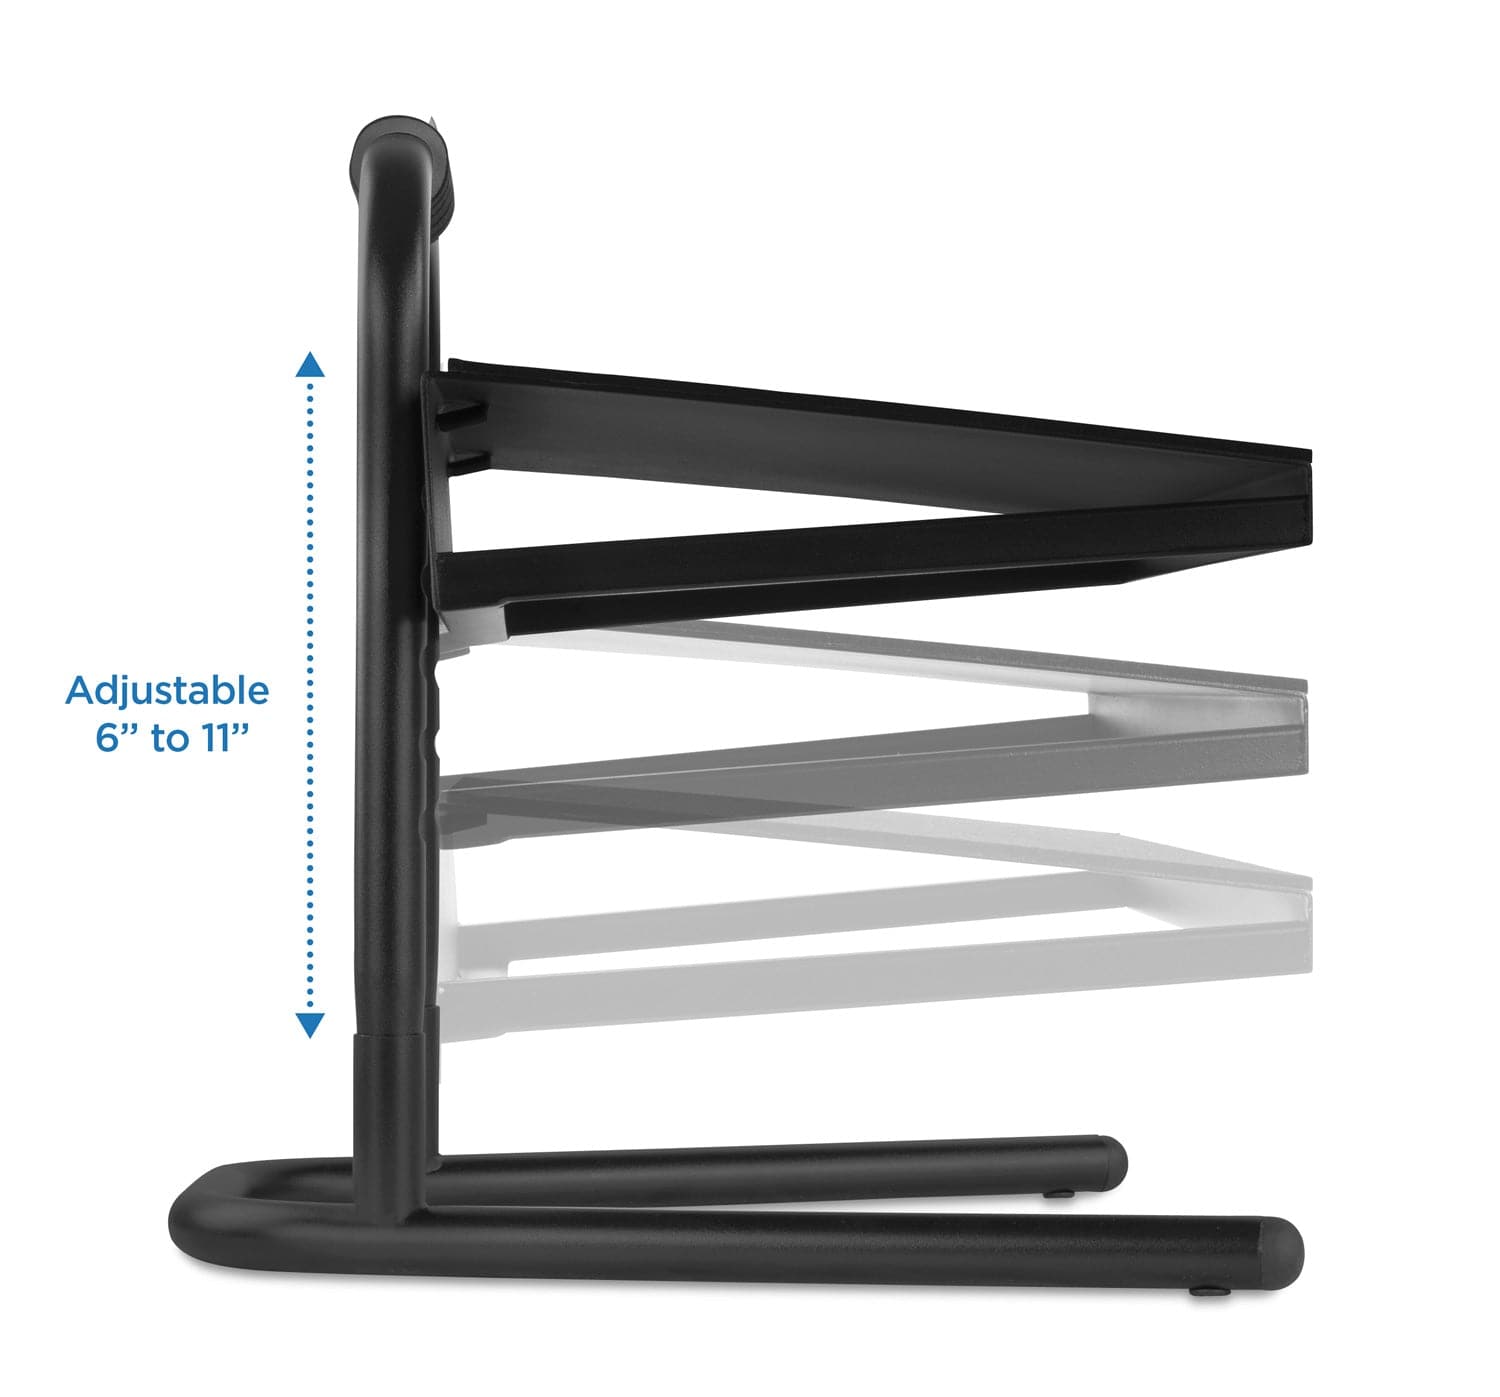 Mount-It! Under Desk Footrest, Adjustable Height/Angle and Massaging Rollers, Black